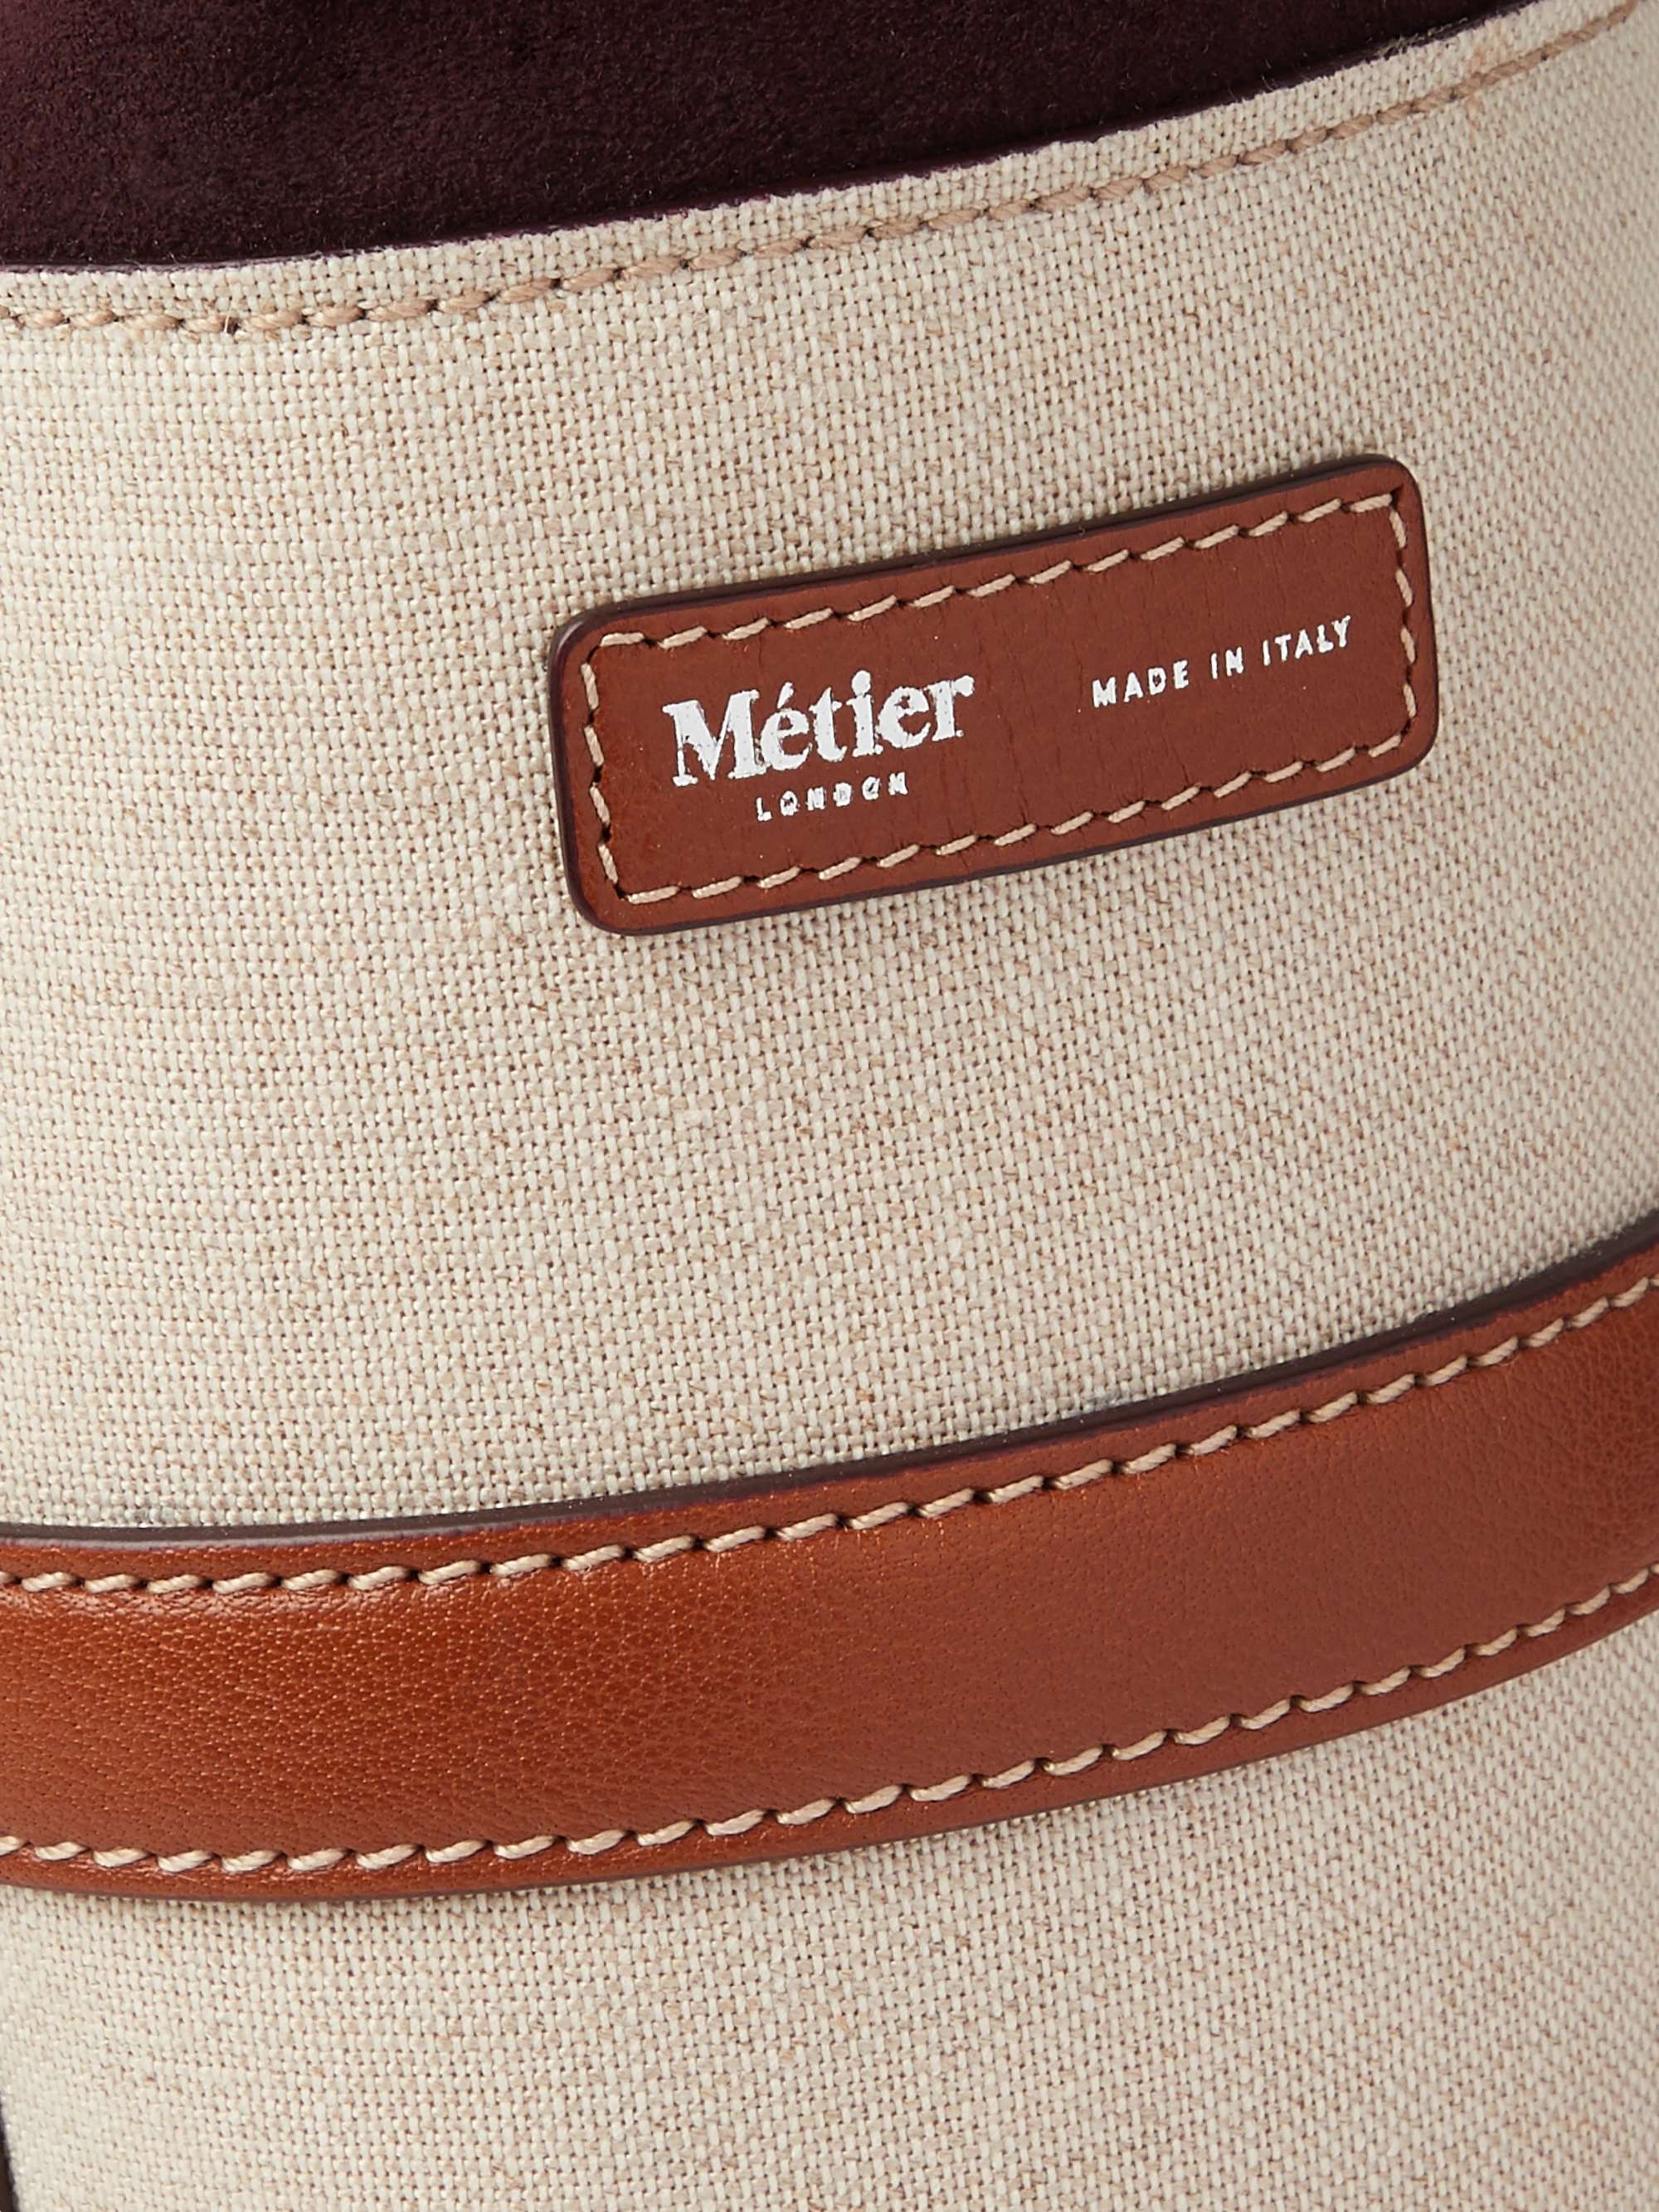 MÉTIER Leather-Trimmed Linen Wine Holder